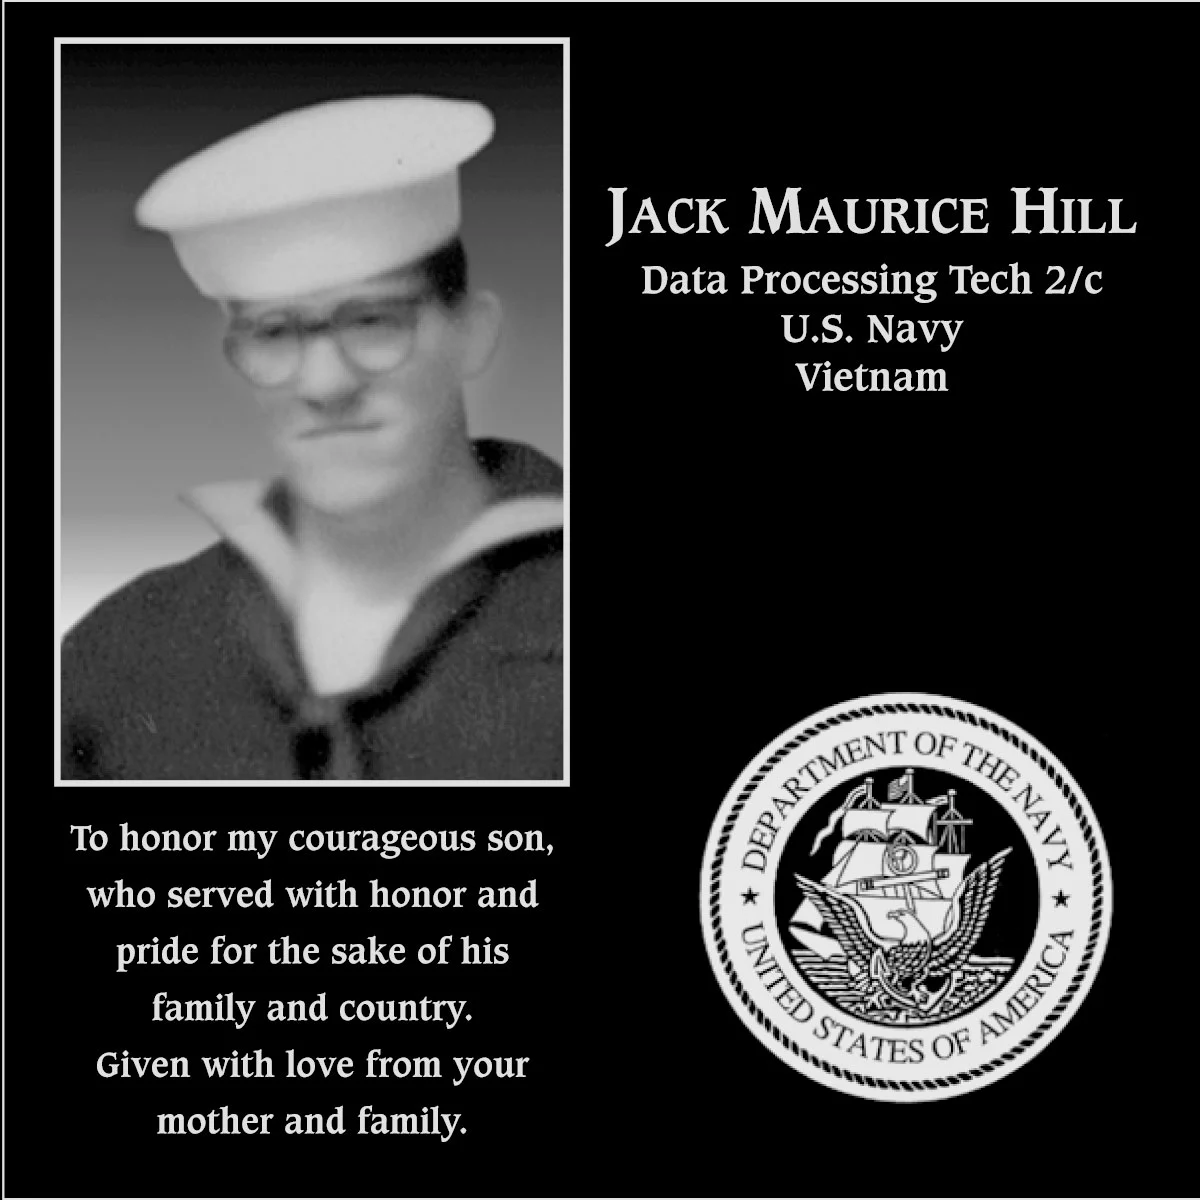 Jack Maurice Hill